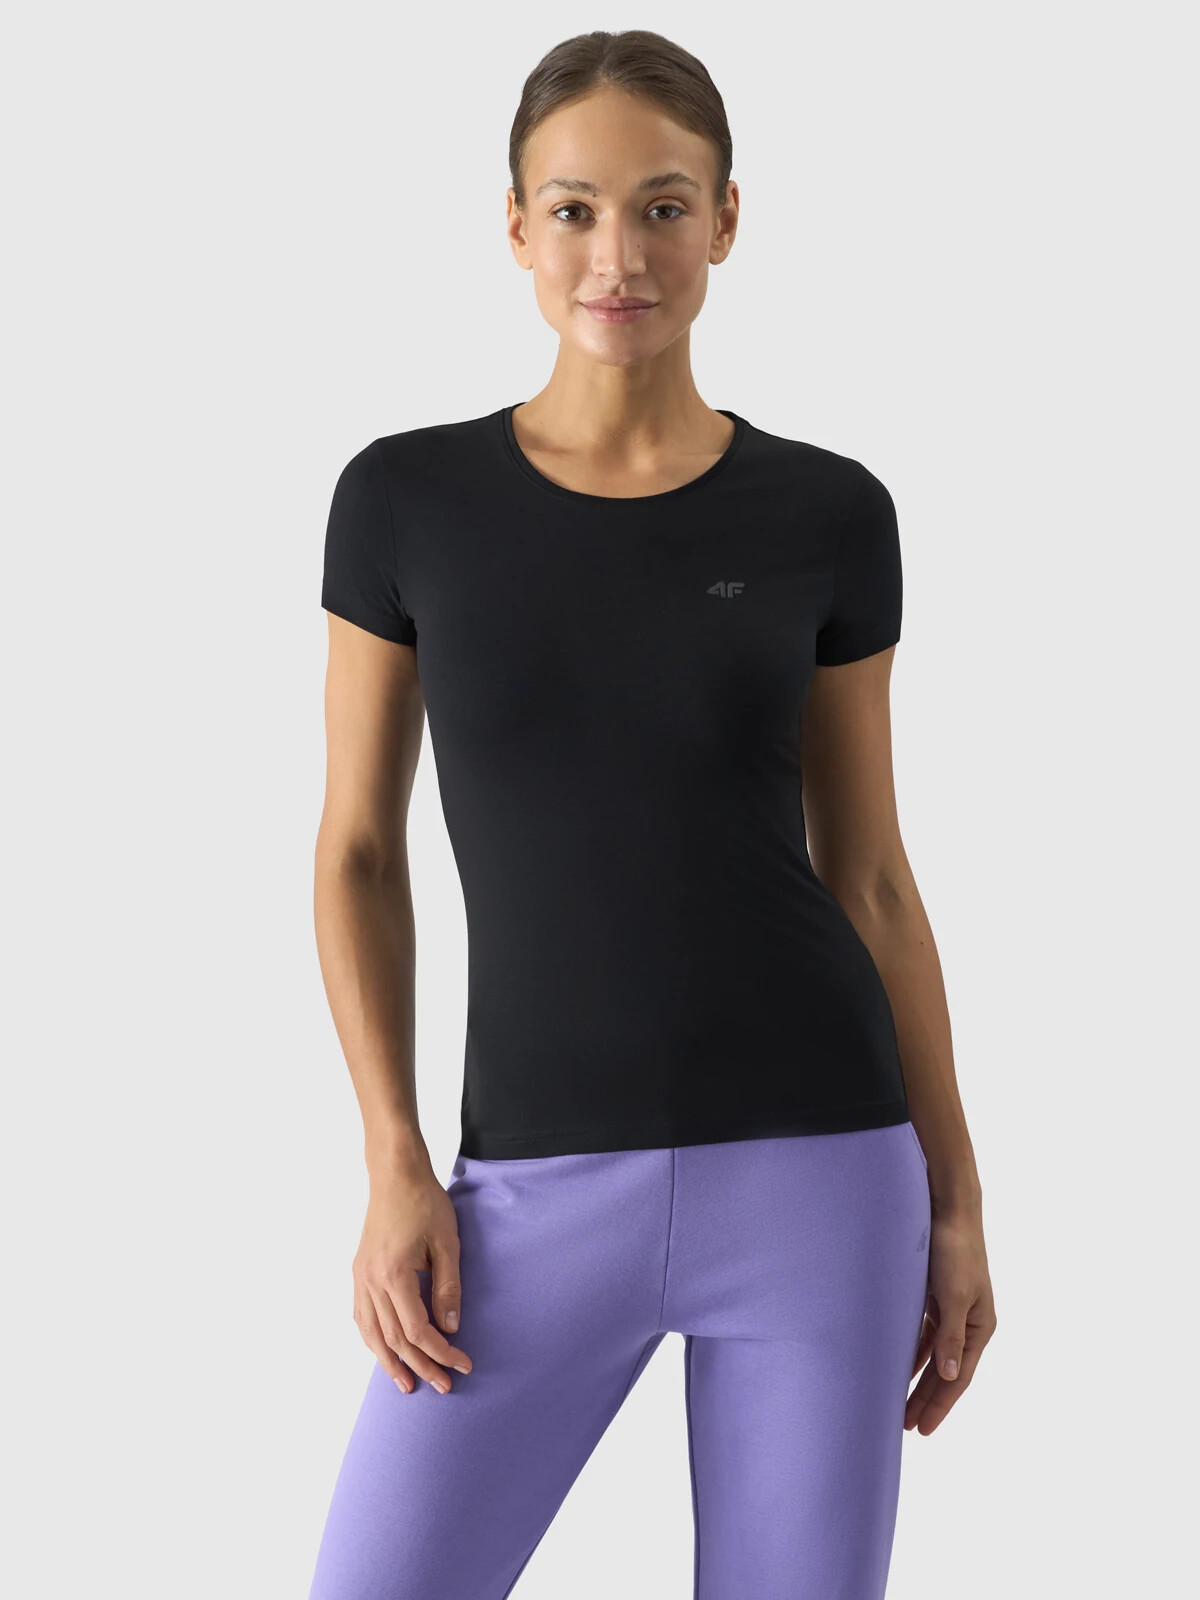 Women's slim T-shirt 4F - black